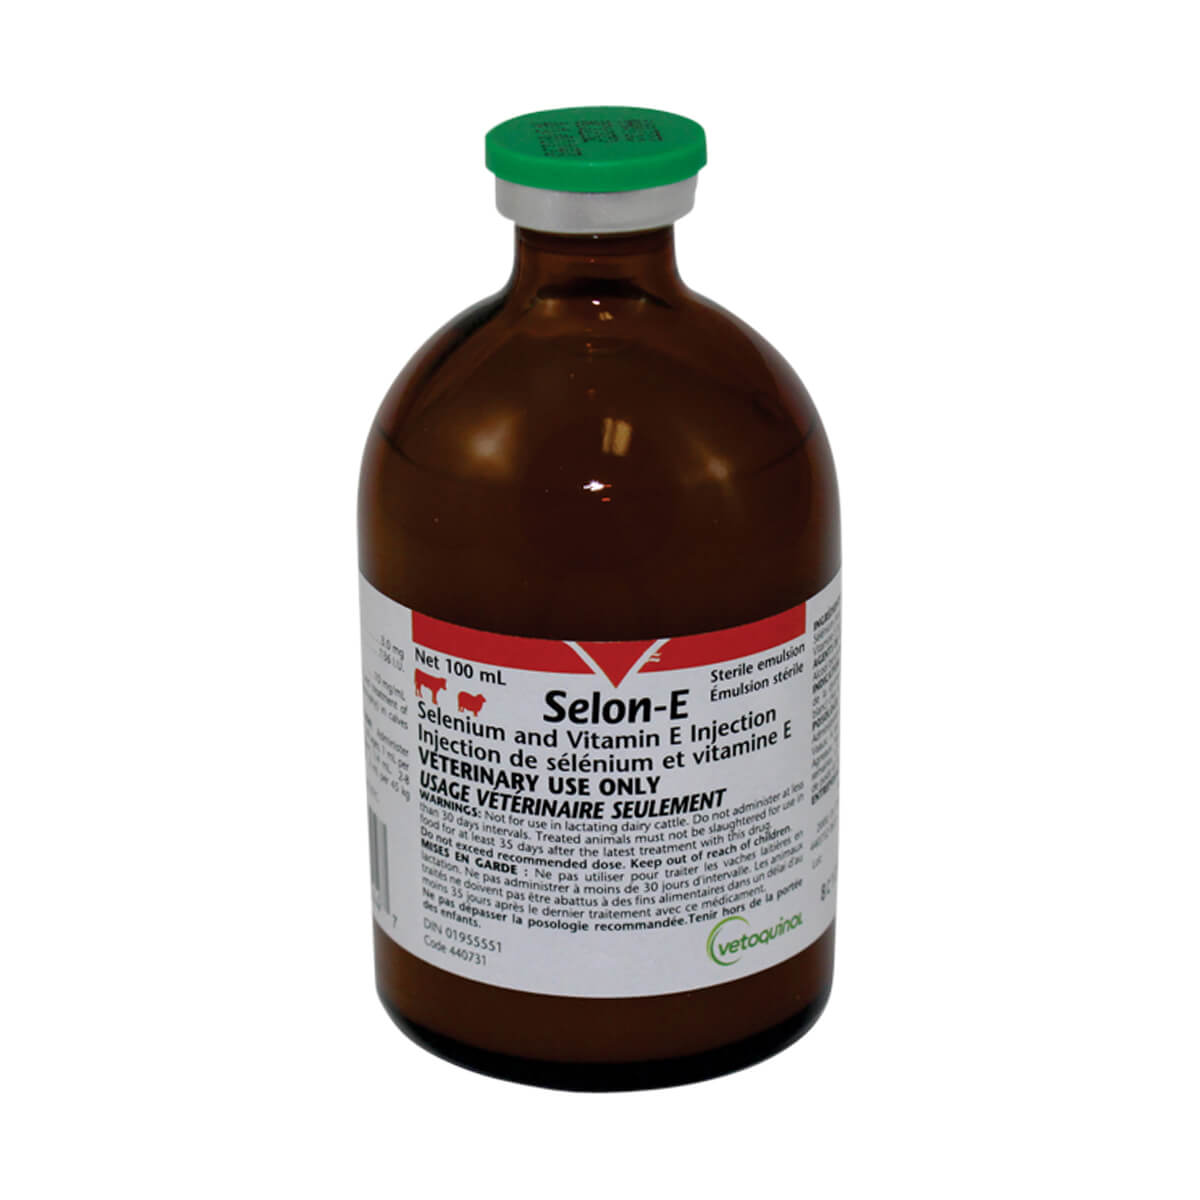 Selenium-E - 100 ml